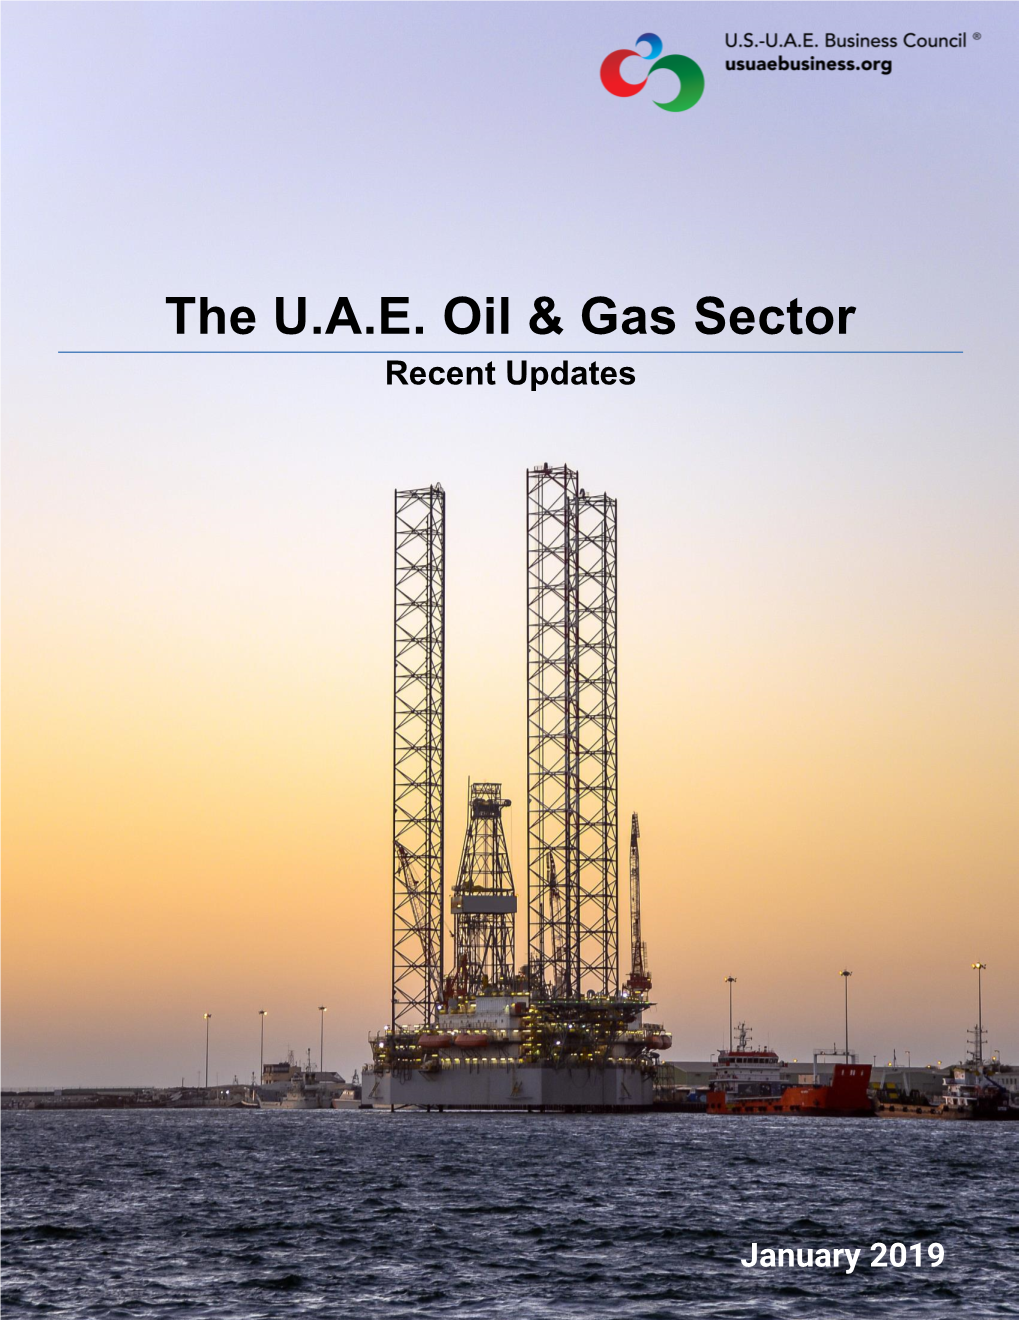 The U.A.E. Oil & Gas Sector